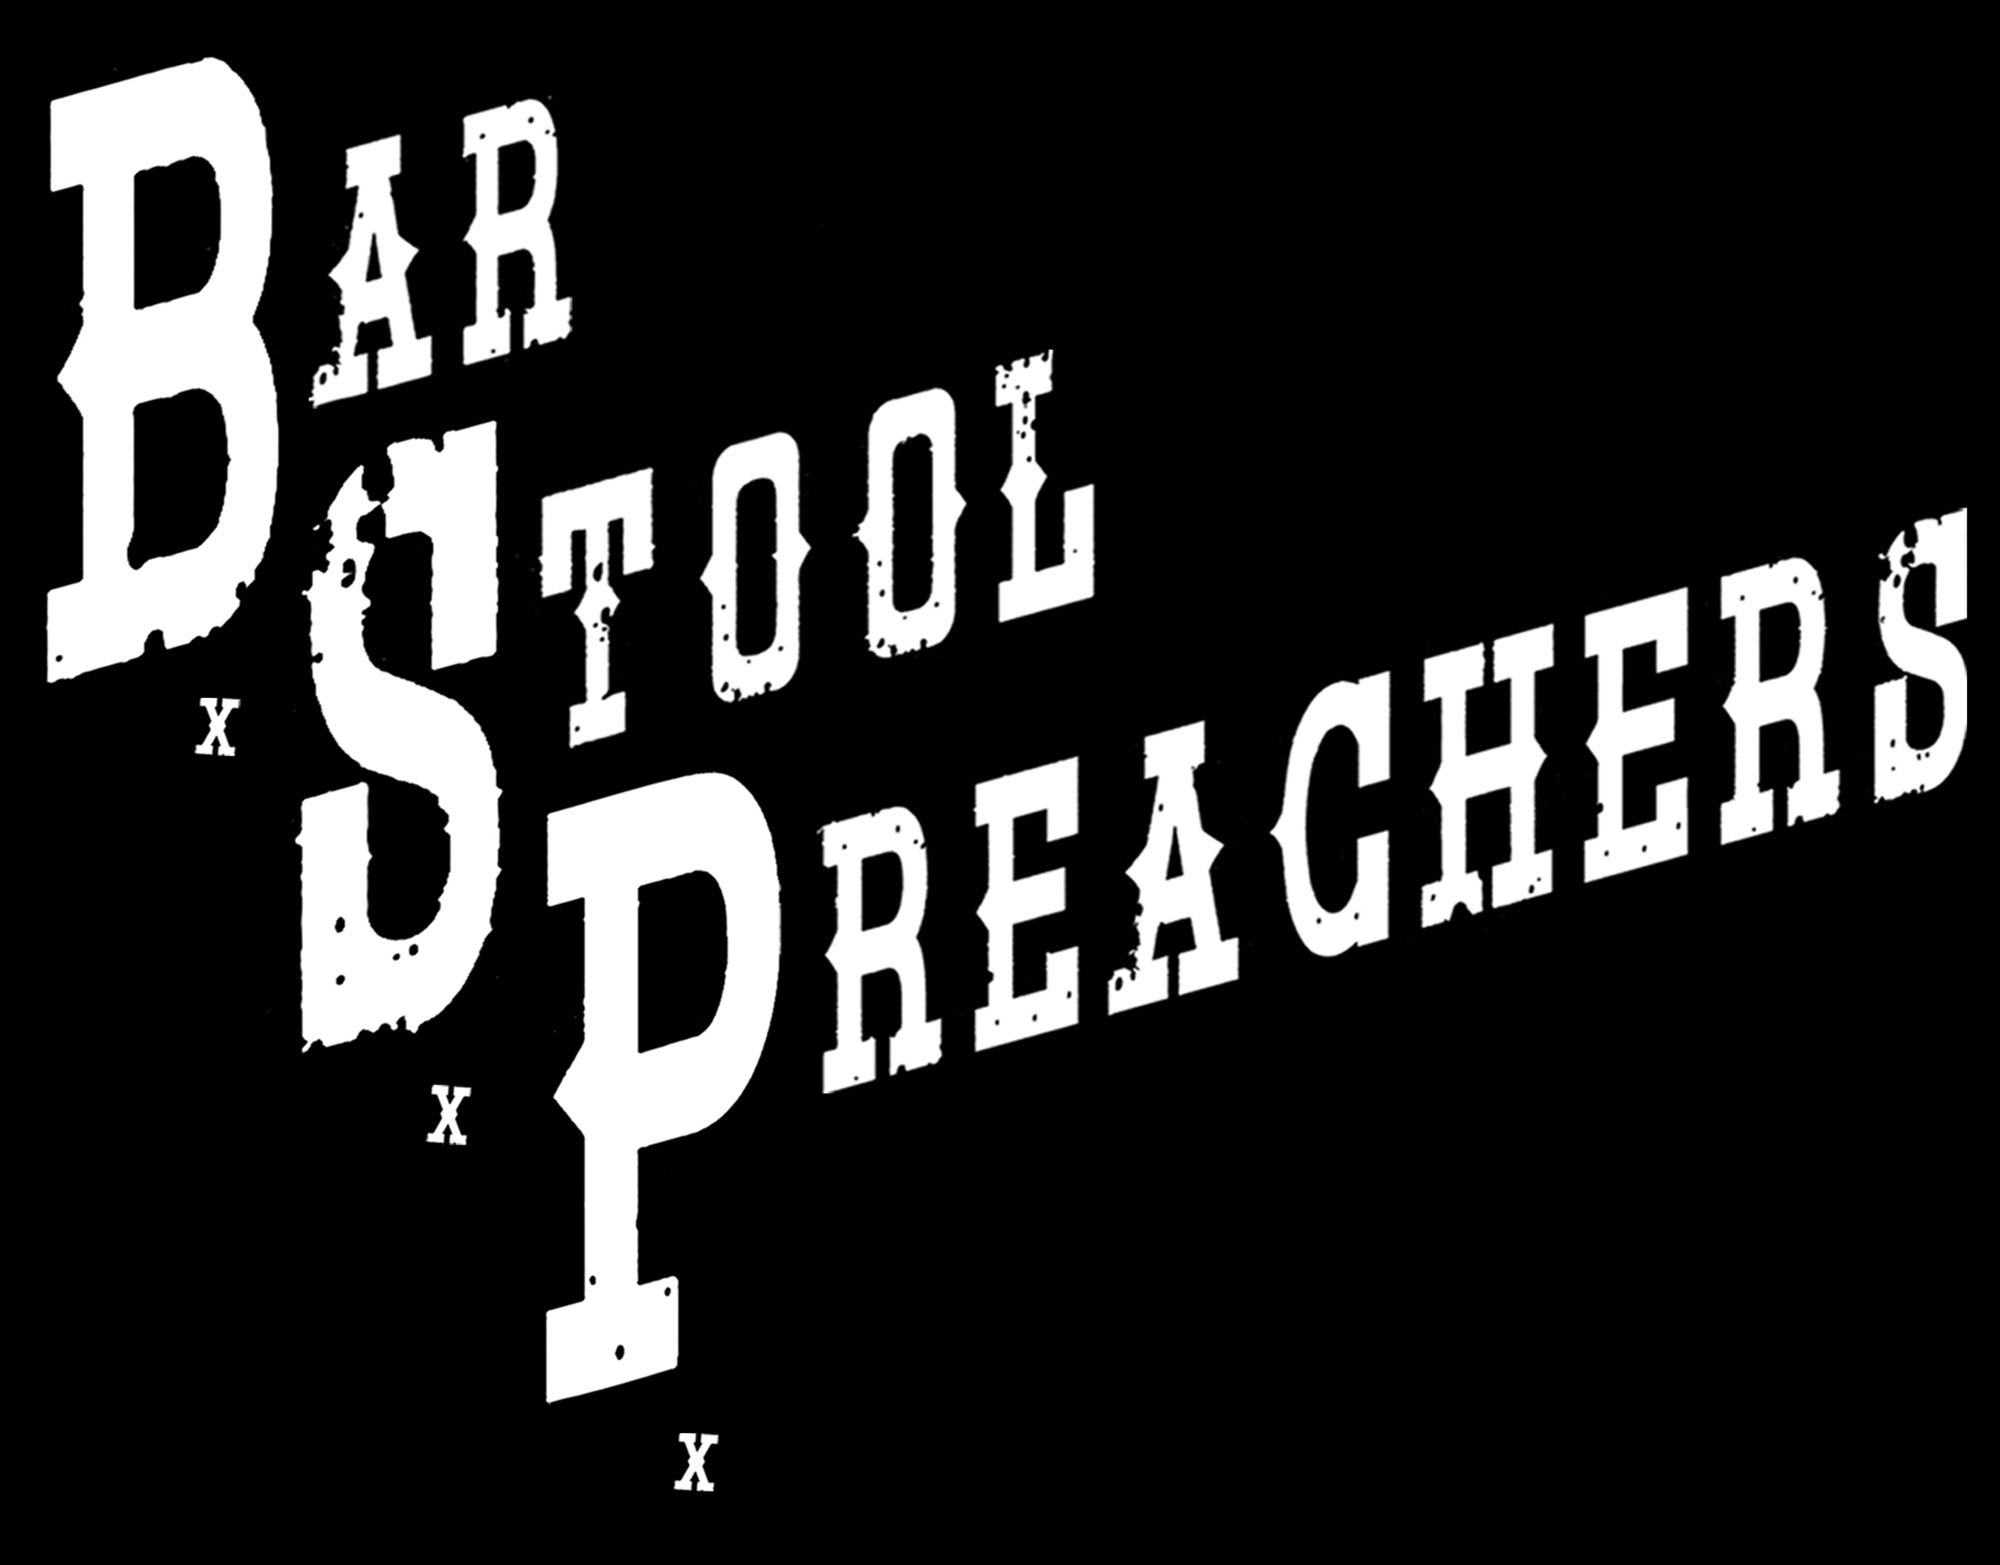 Bar Stool Preachers